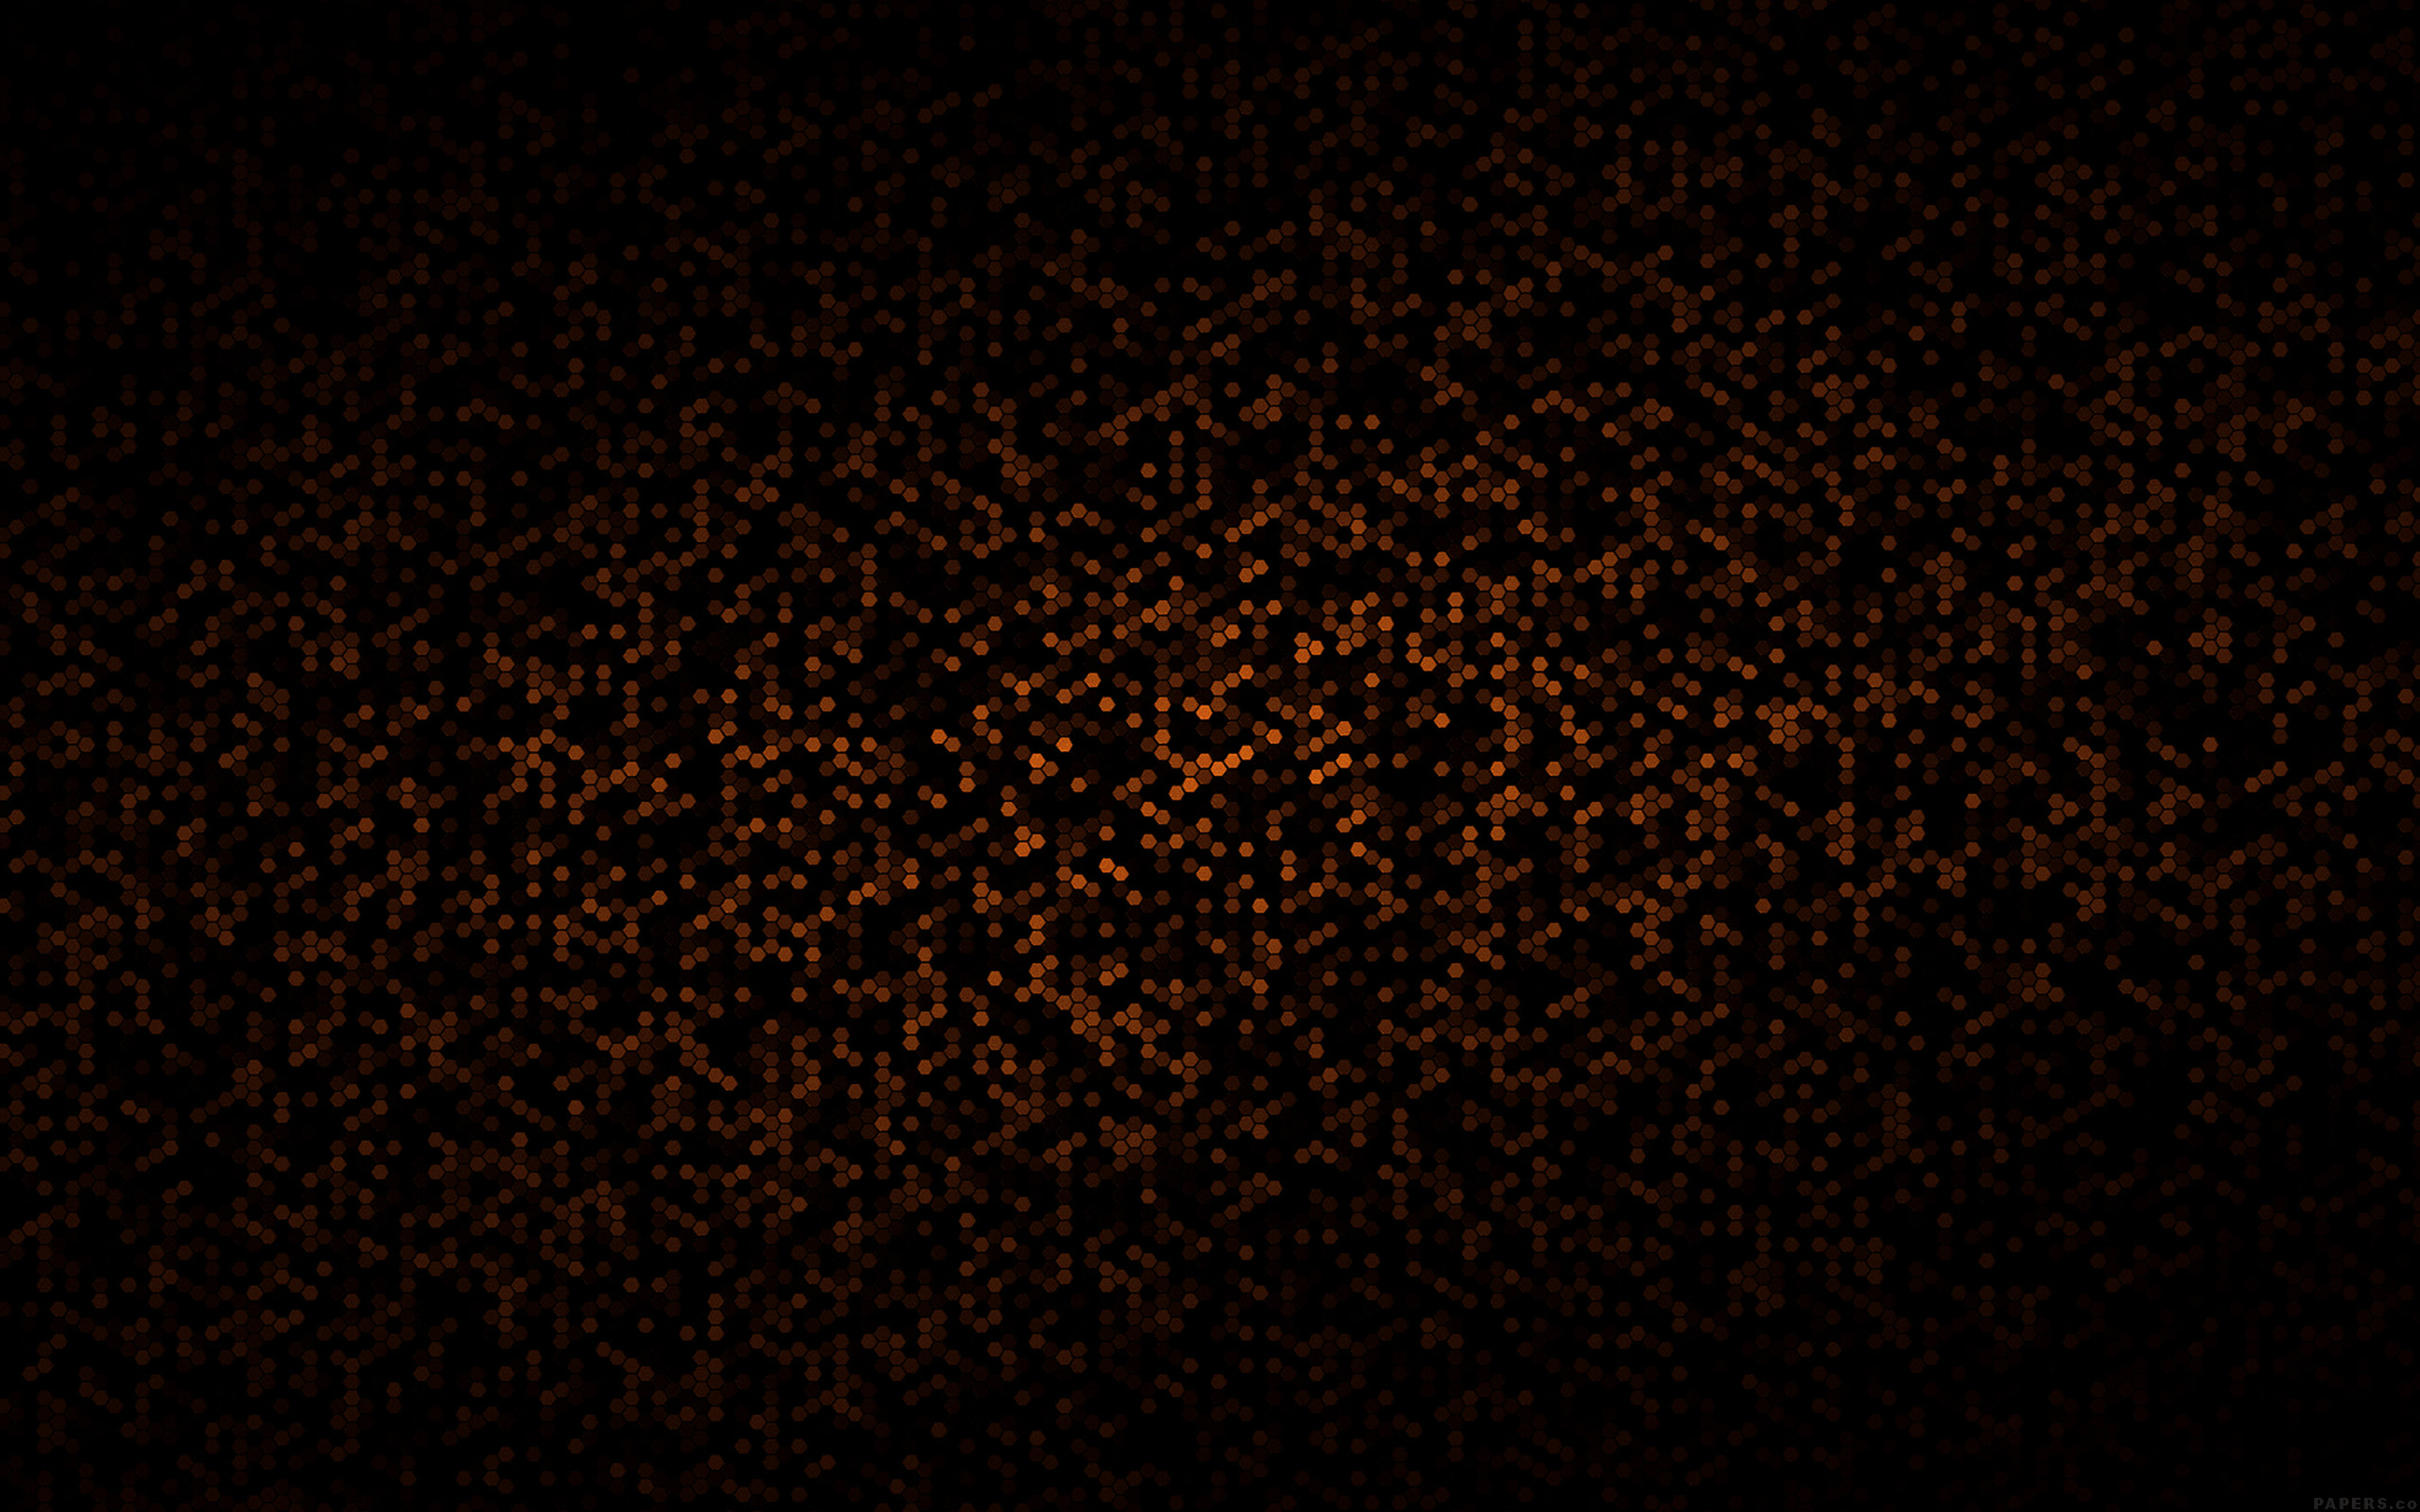 wallpaper for desktop, laptop. dots pattern black and orange abstract